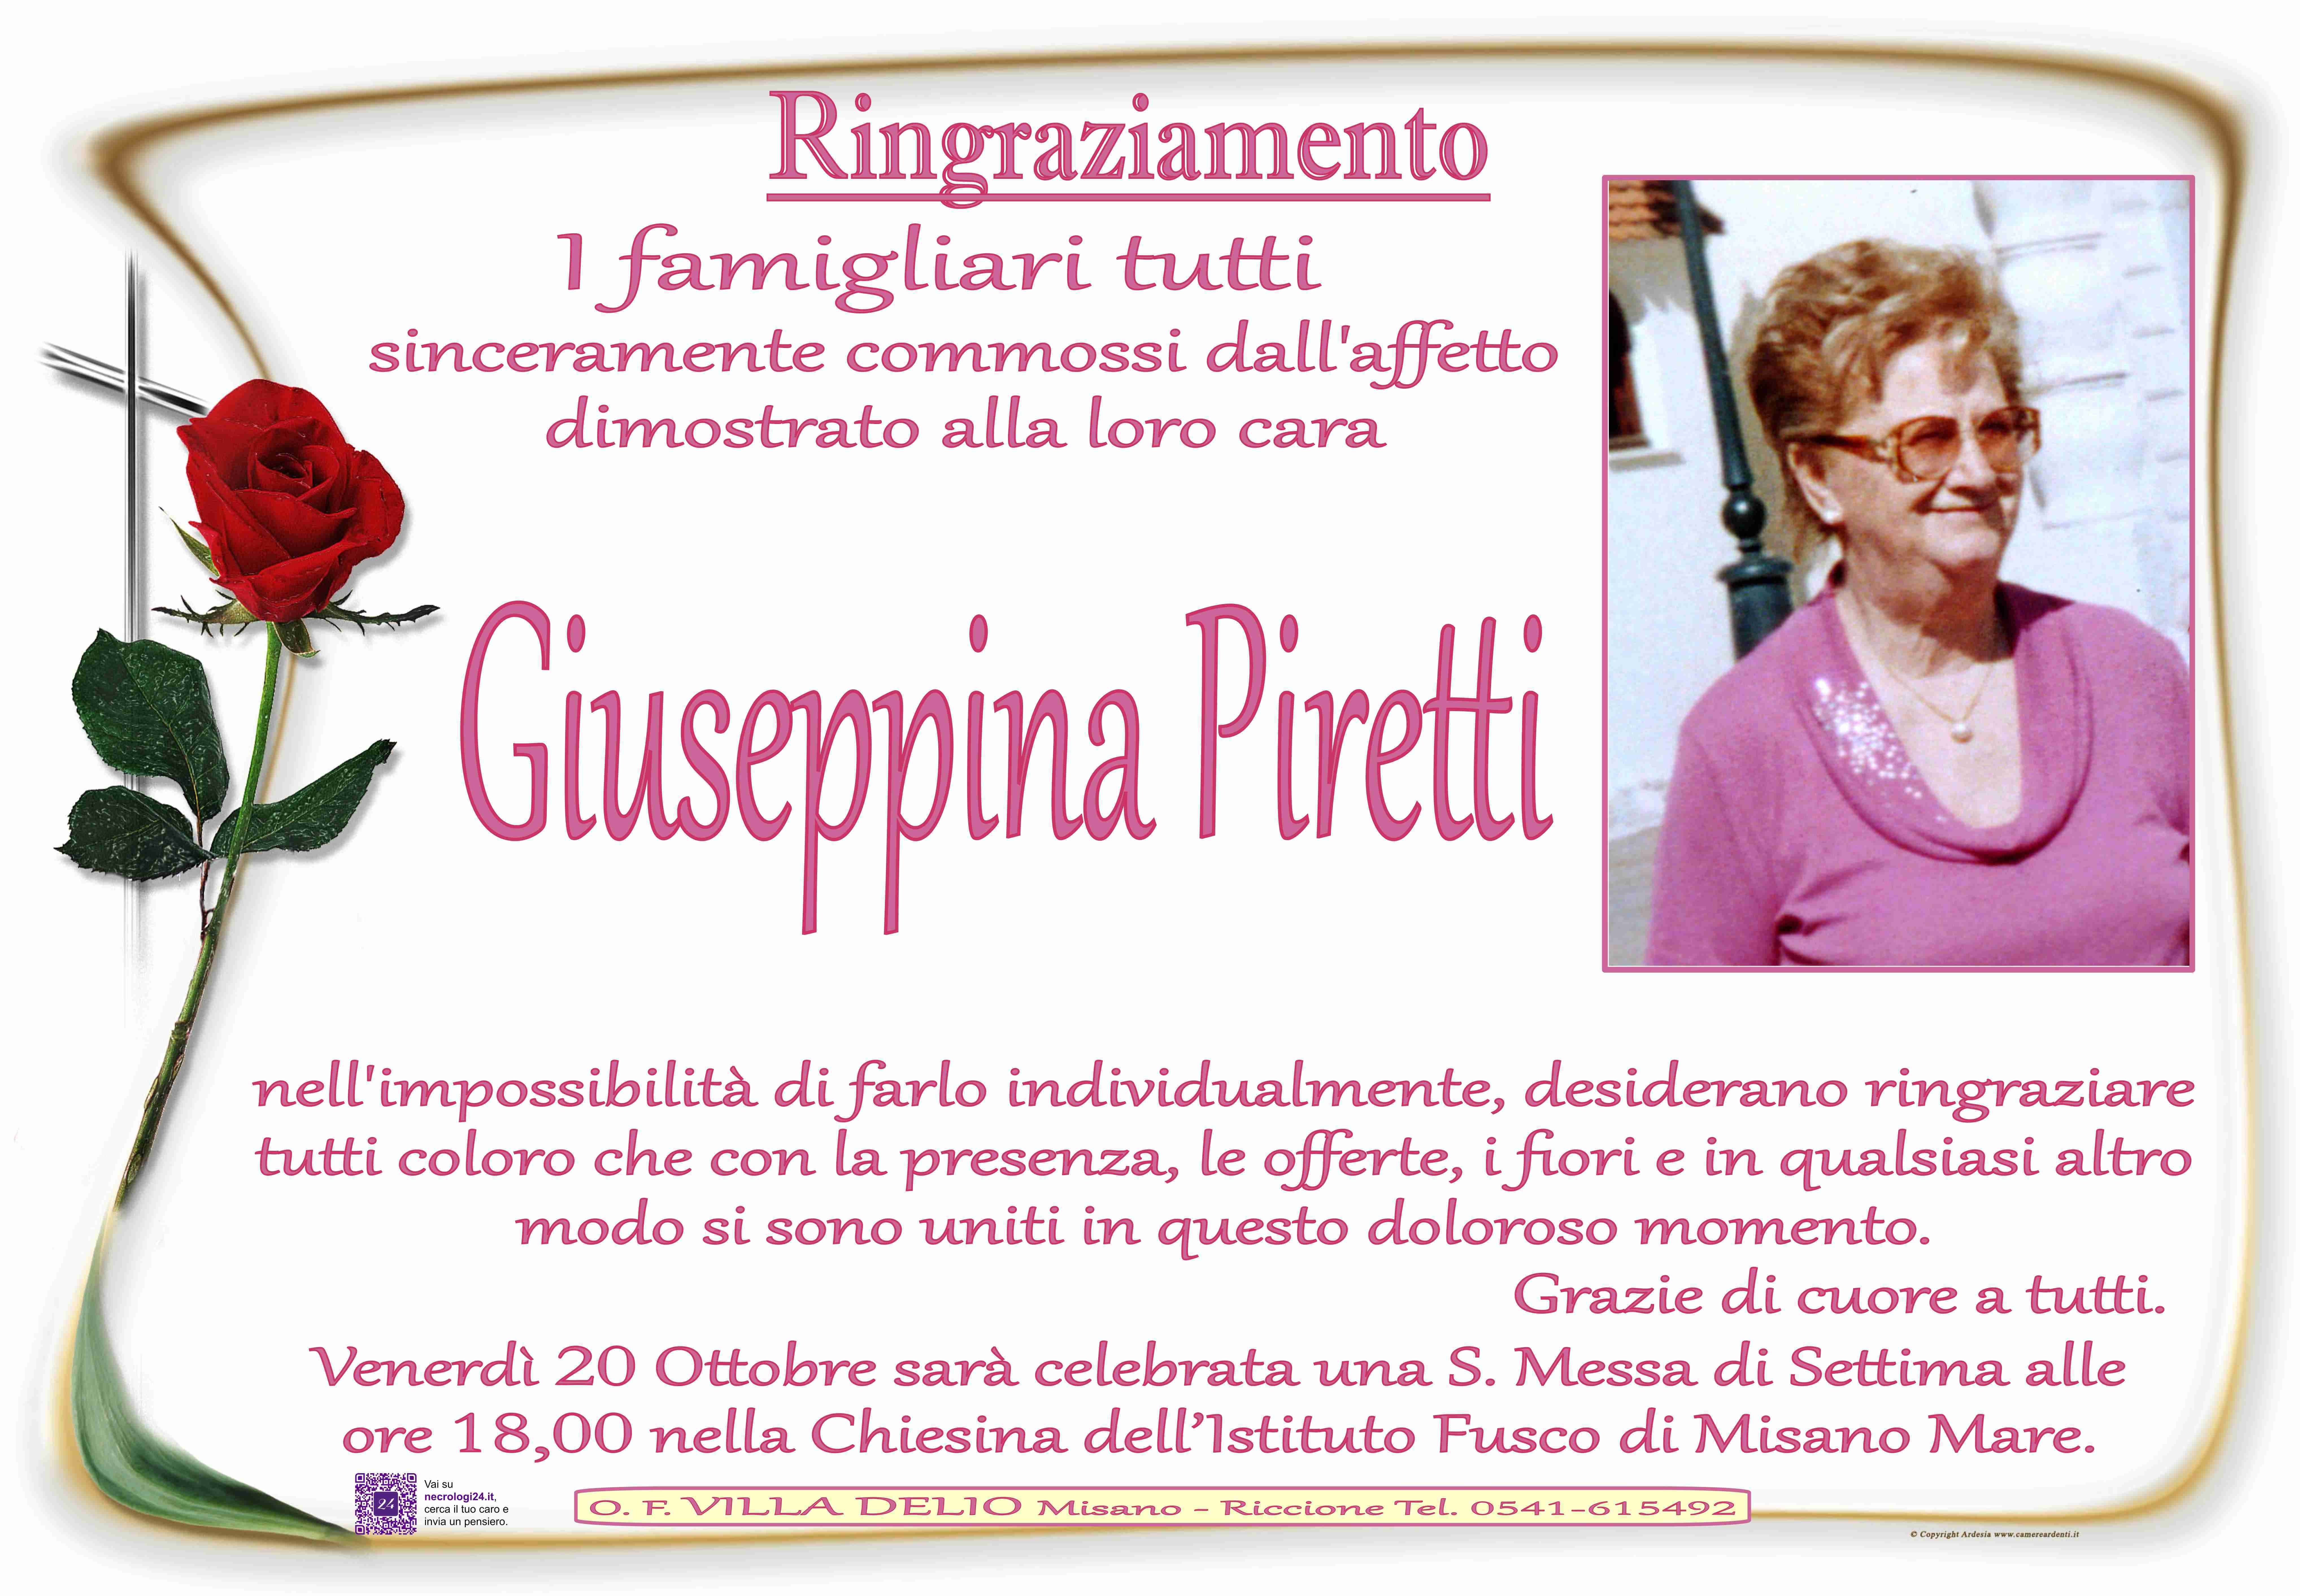 Giuseppina Piretti